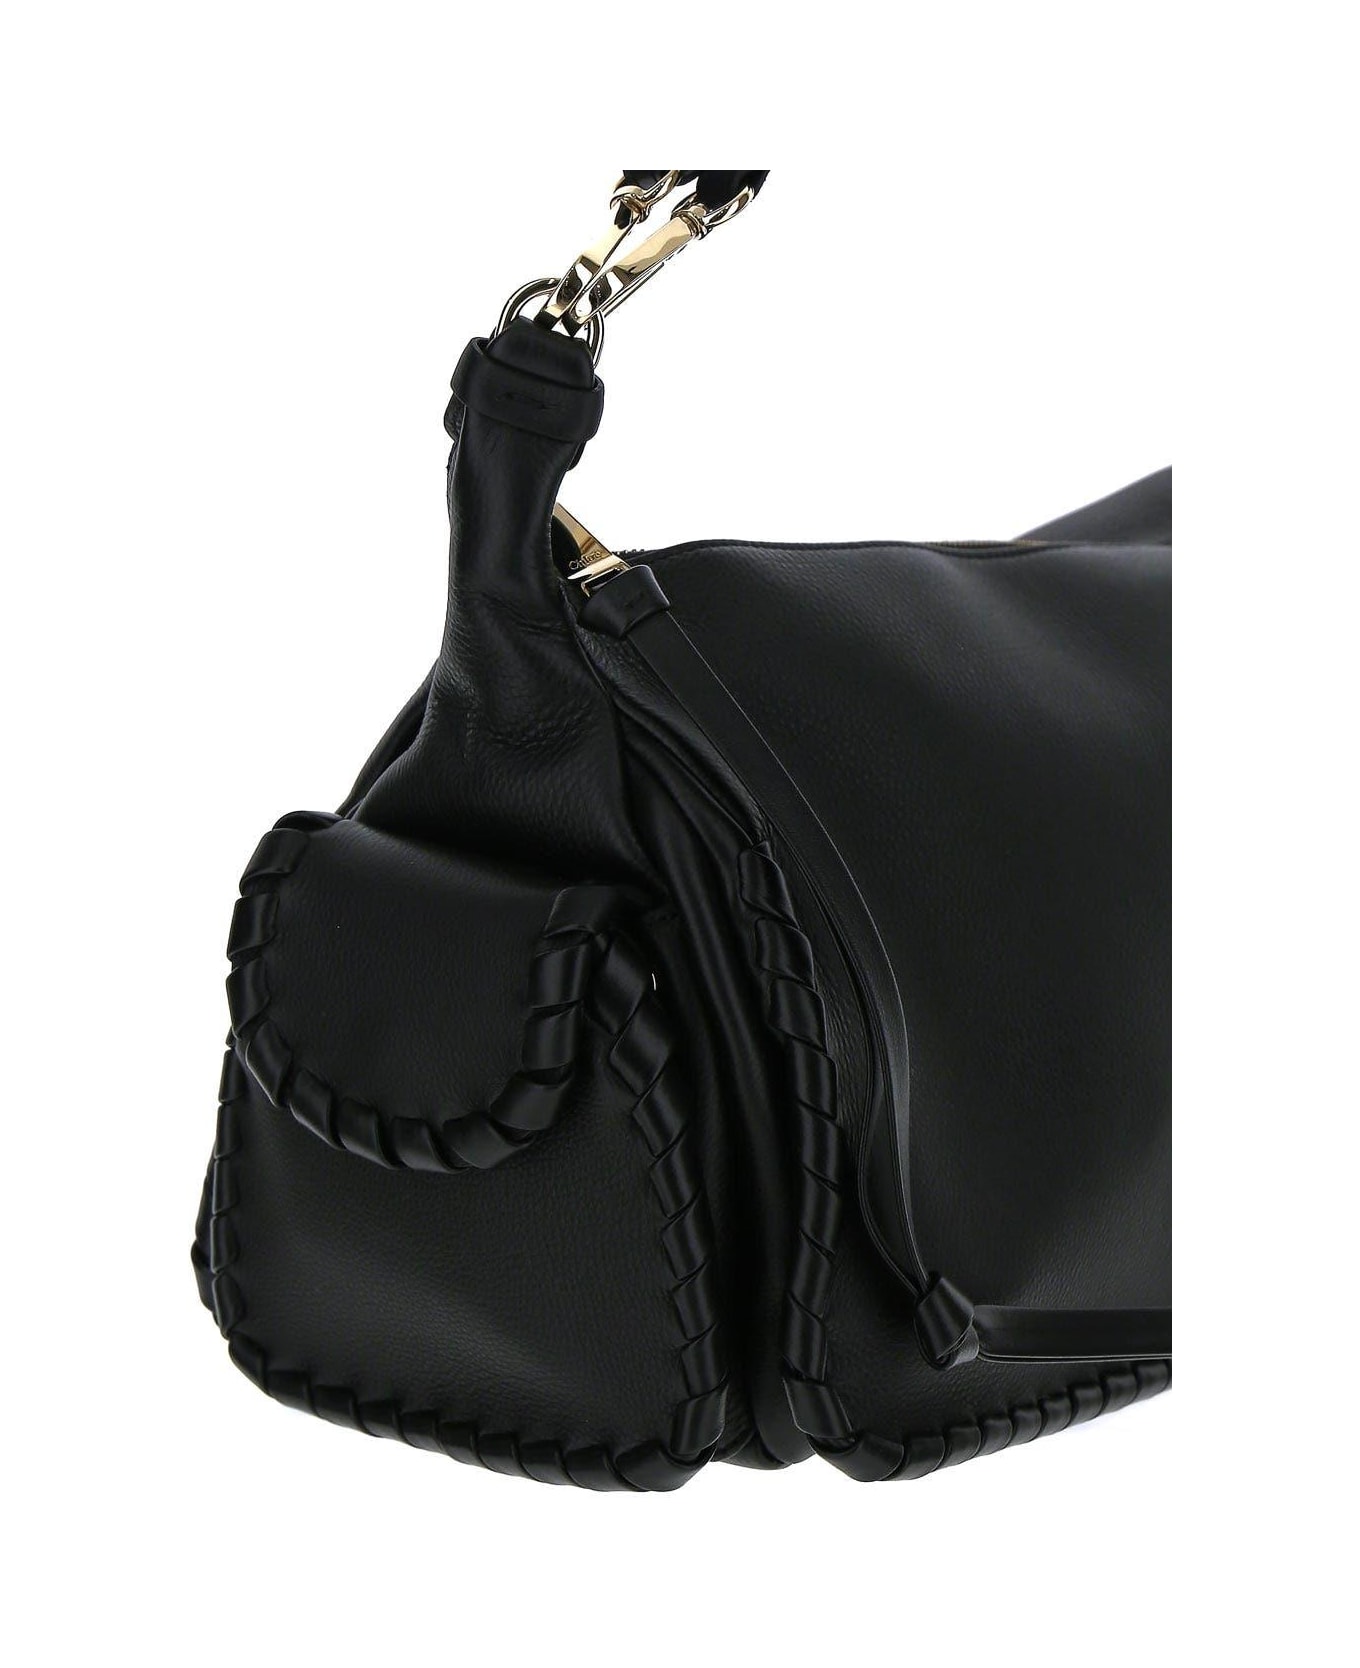 Chloé Black Leather Bag - Black